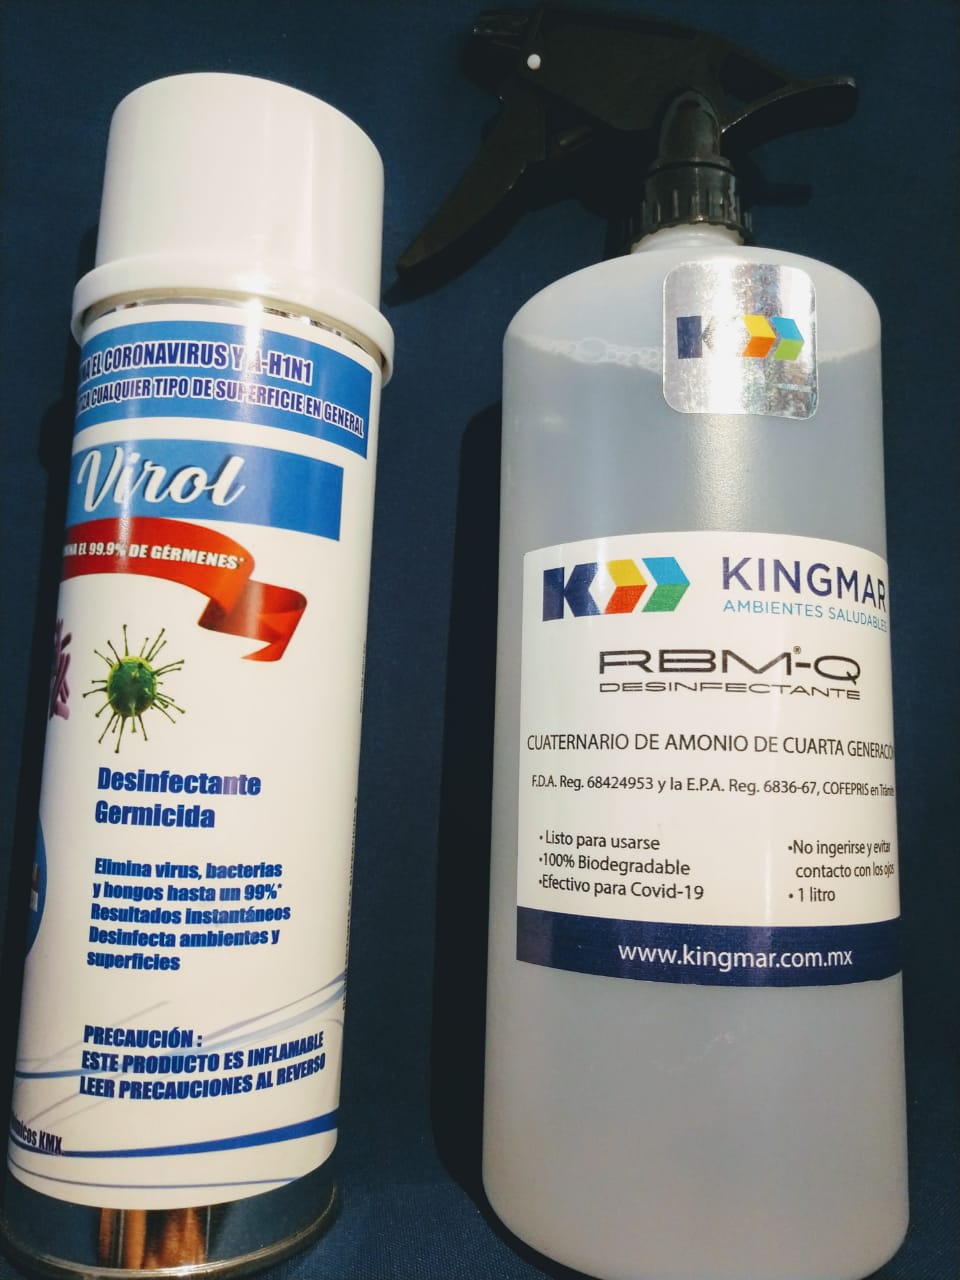 Spray Desinfectante RBM®-Q – Desinfectantes RBM